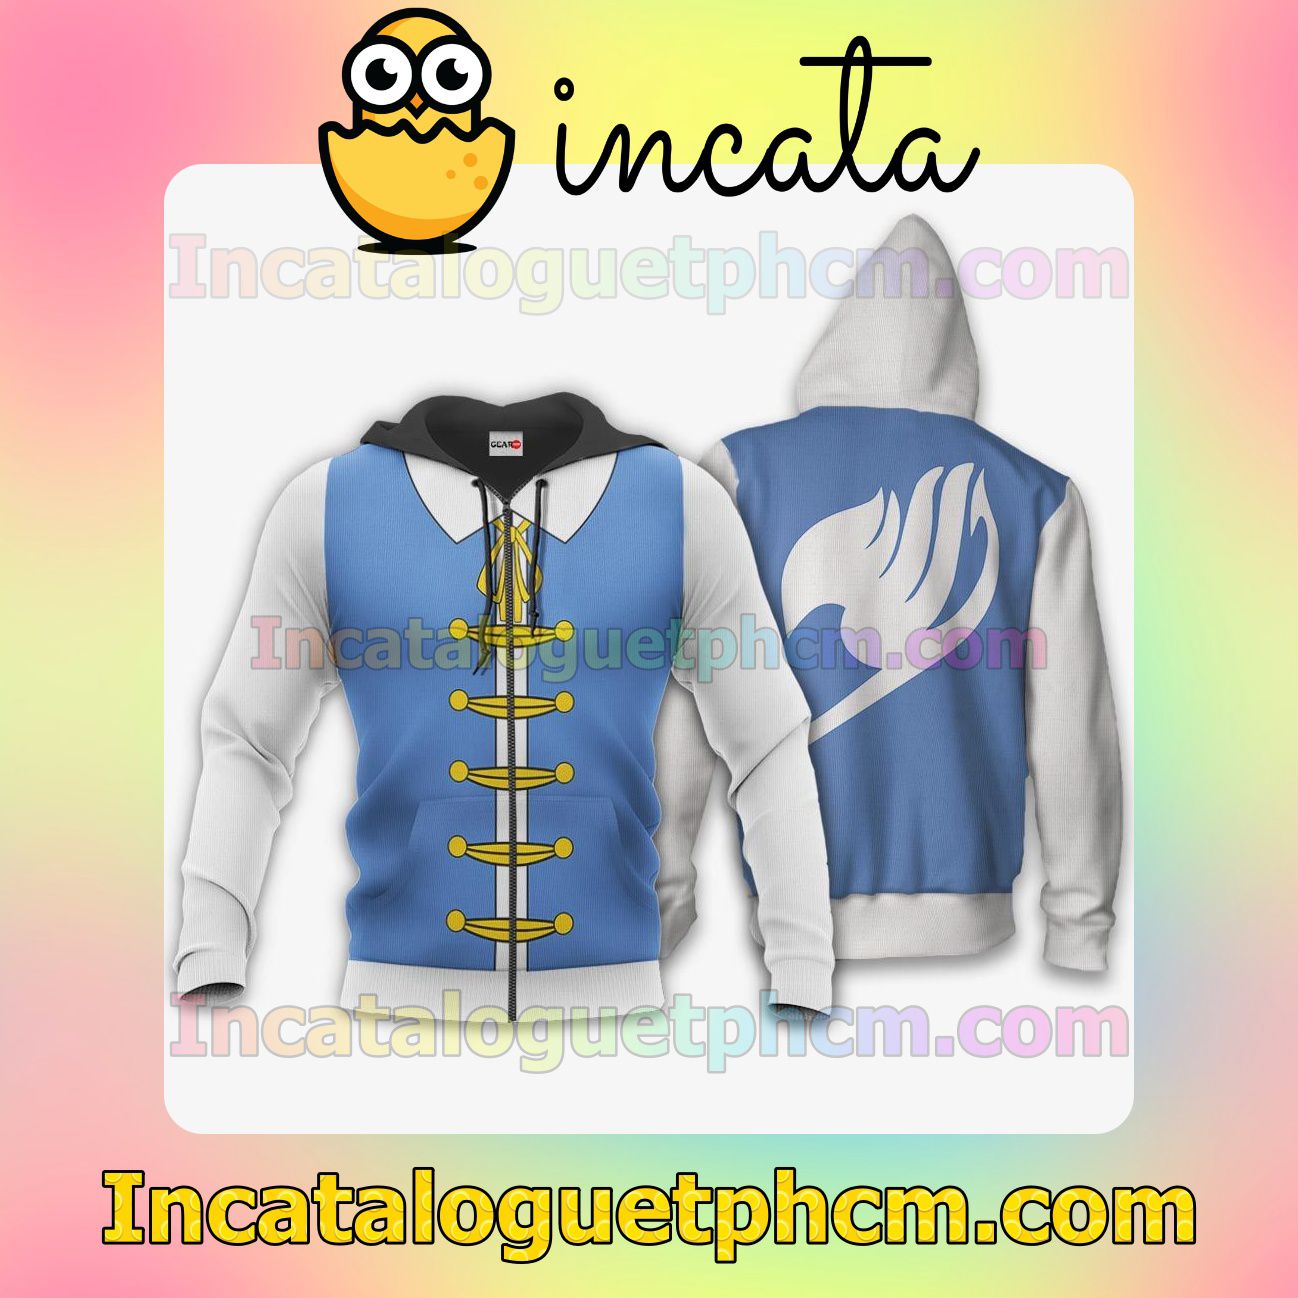 Lucy Heartfilia Uniform Fairy Tail Anime Clothing Merch Zip Hoodie Jacket Shirts